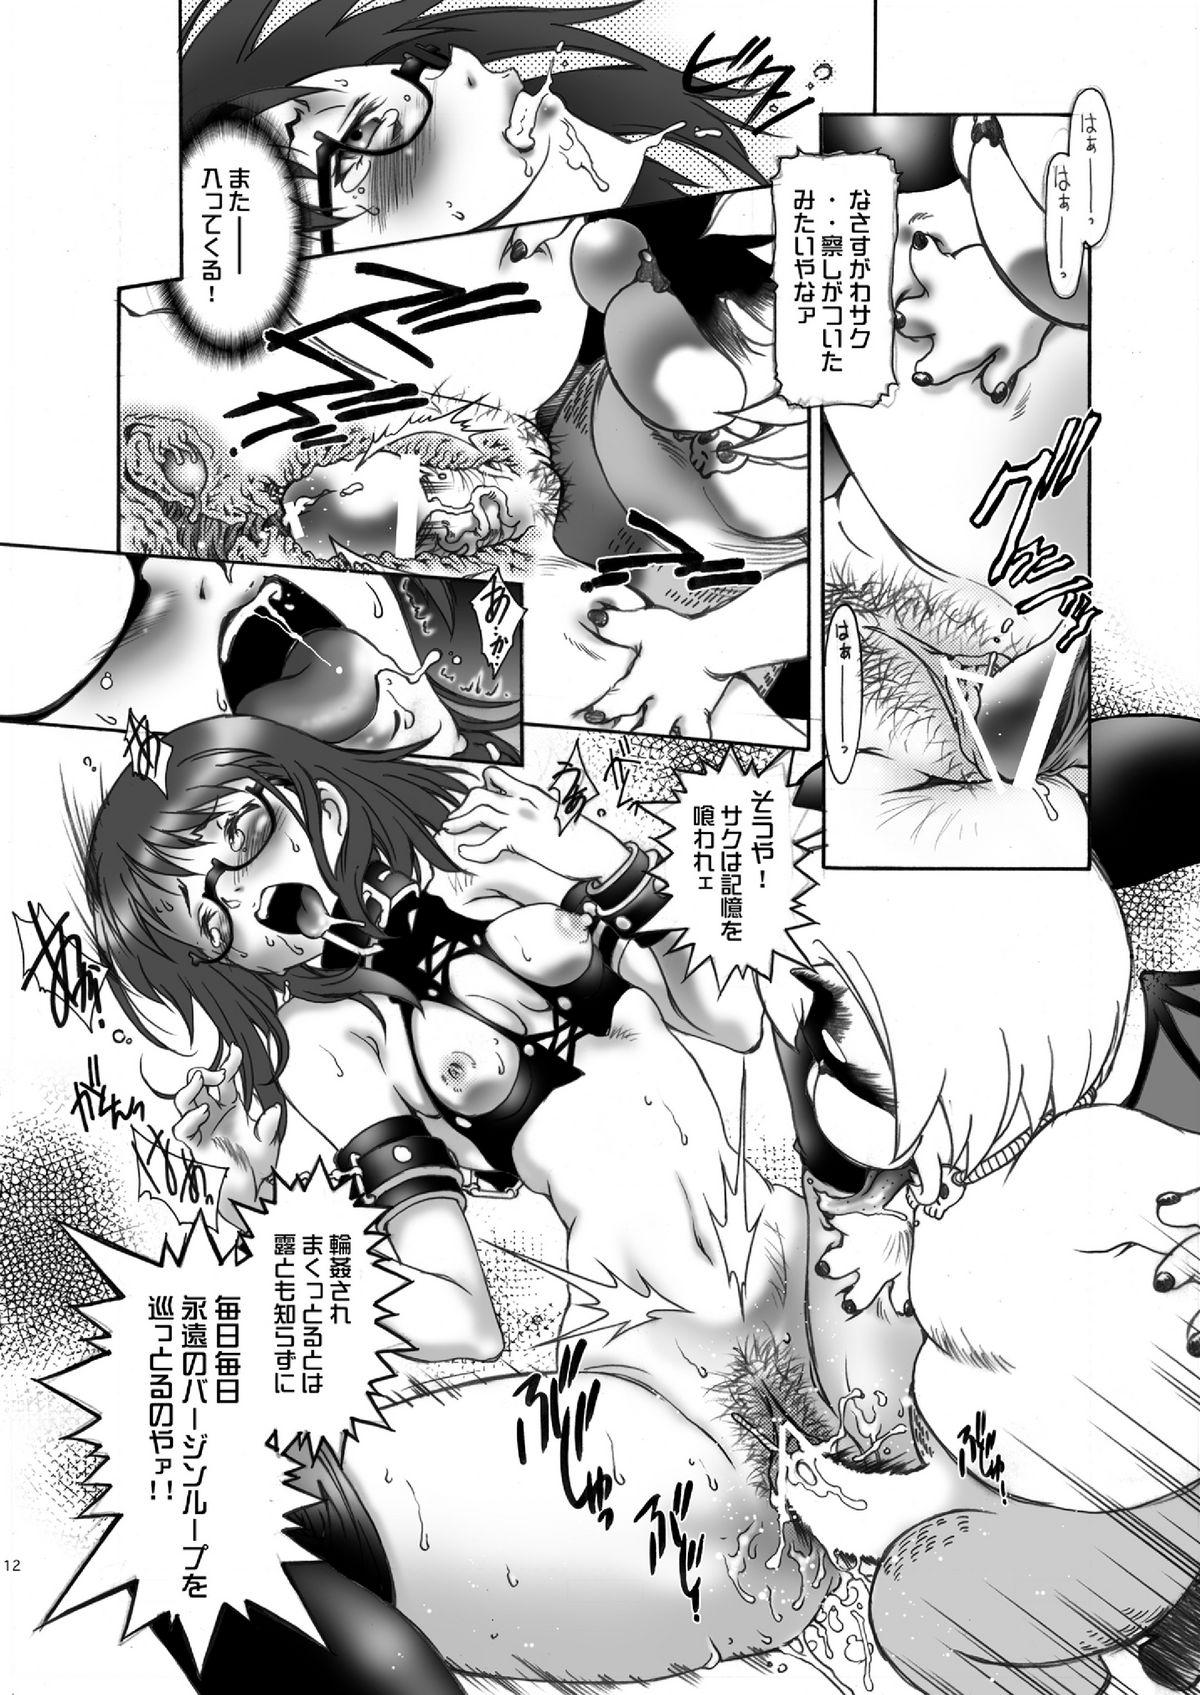 Groupfuck Ittemasuyo! Saku-chan. - Yondemasuyo azazel-san Classroom - Page 12